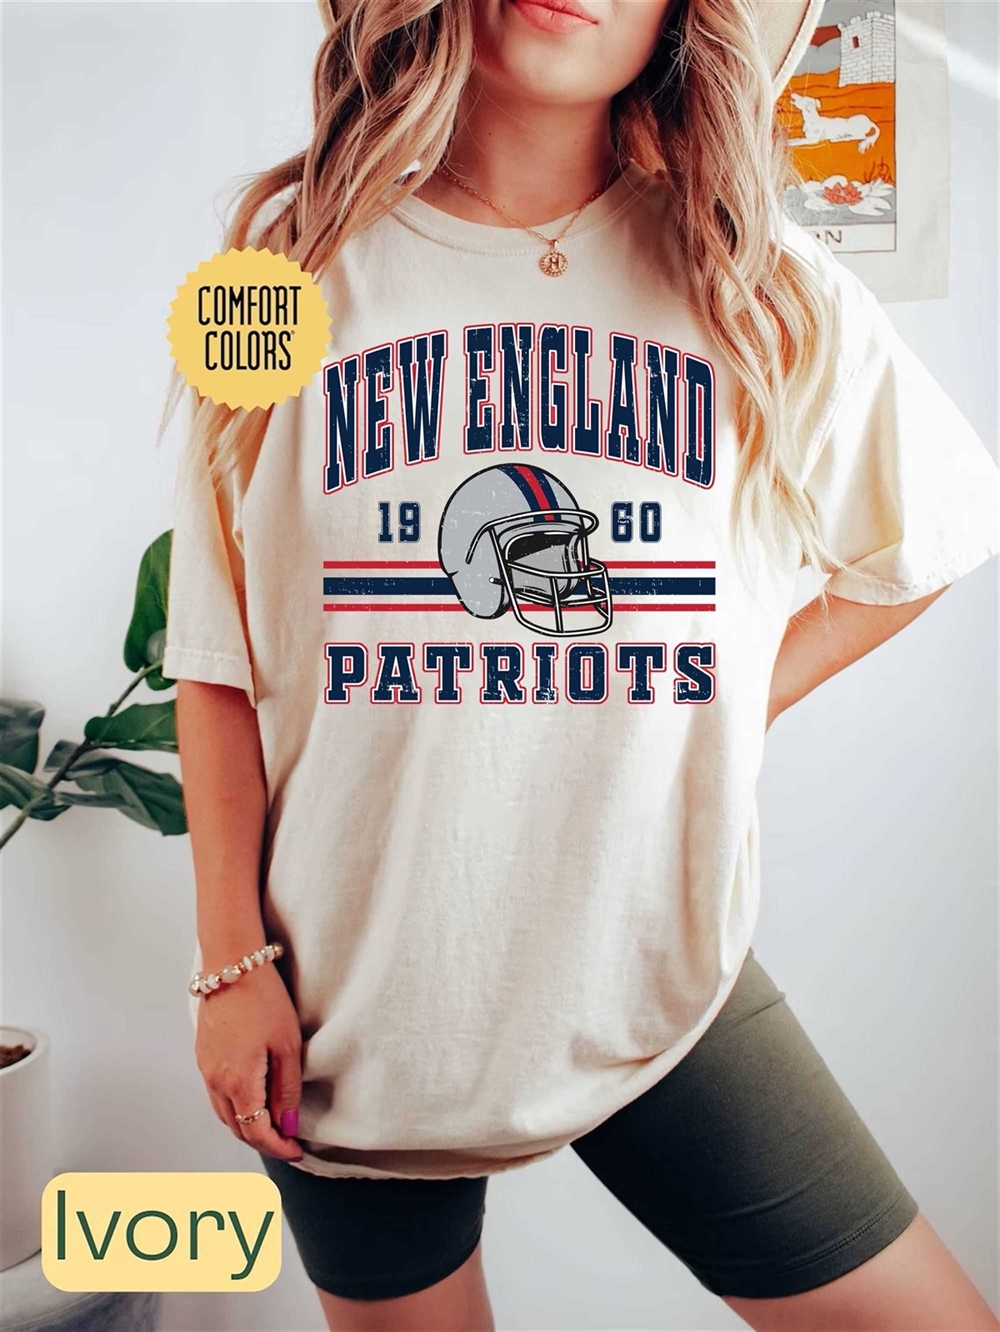 New England Football Comfort Colors Shirt Trendy Vintage Retro 80s Style Football Tshirt